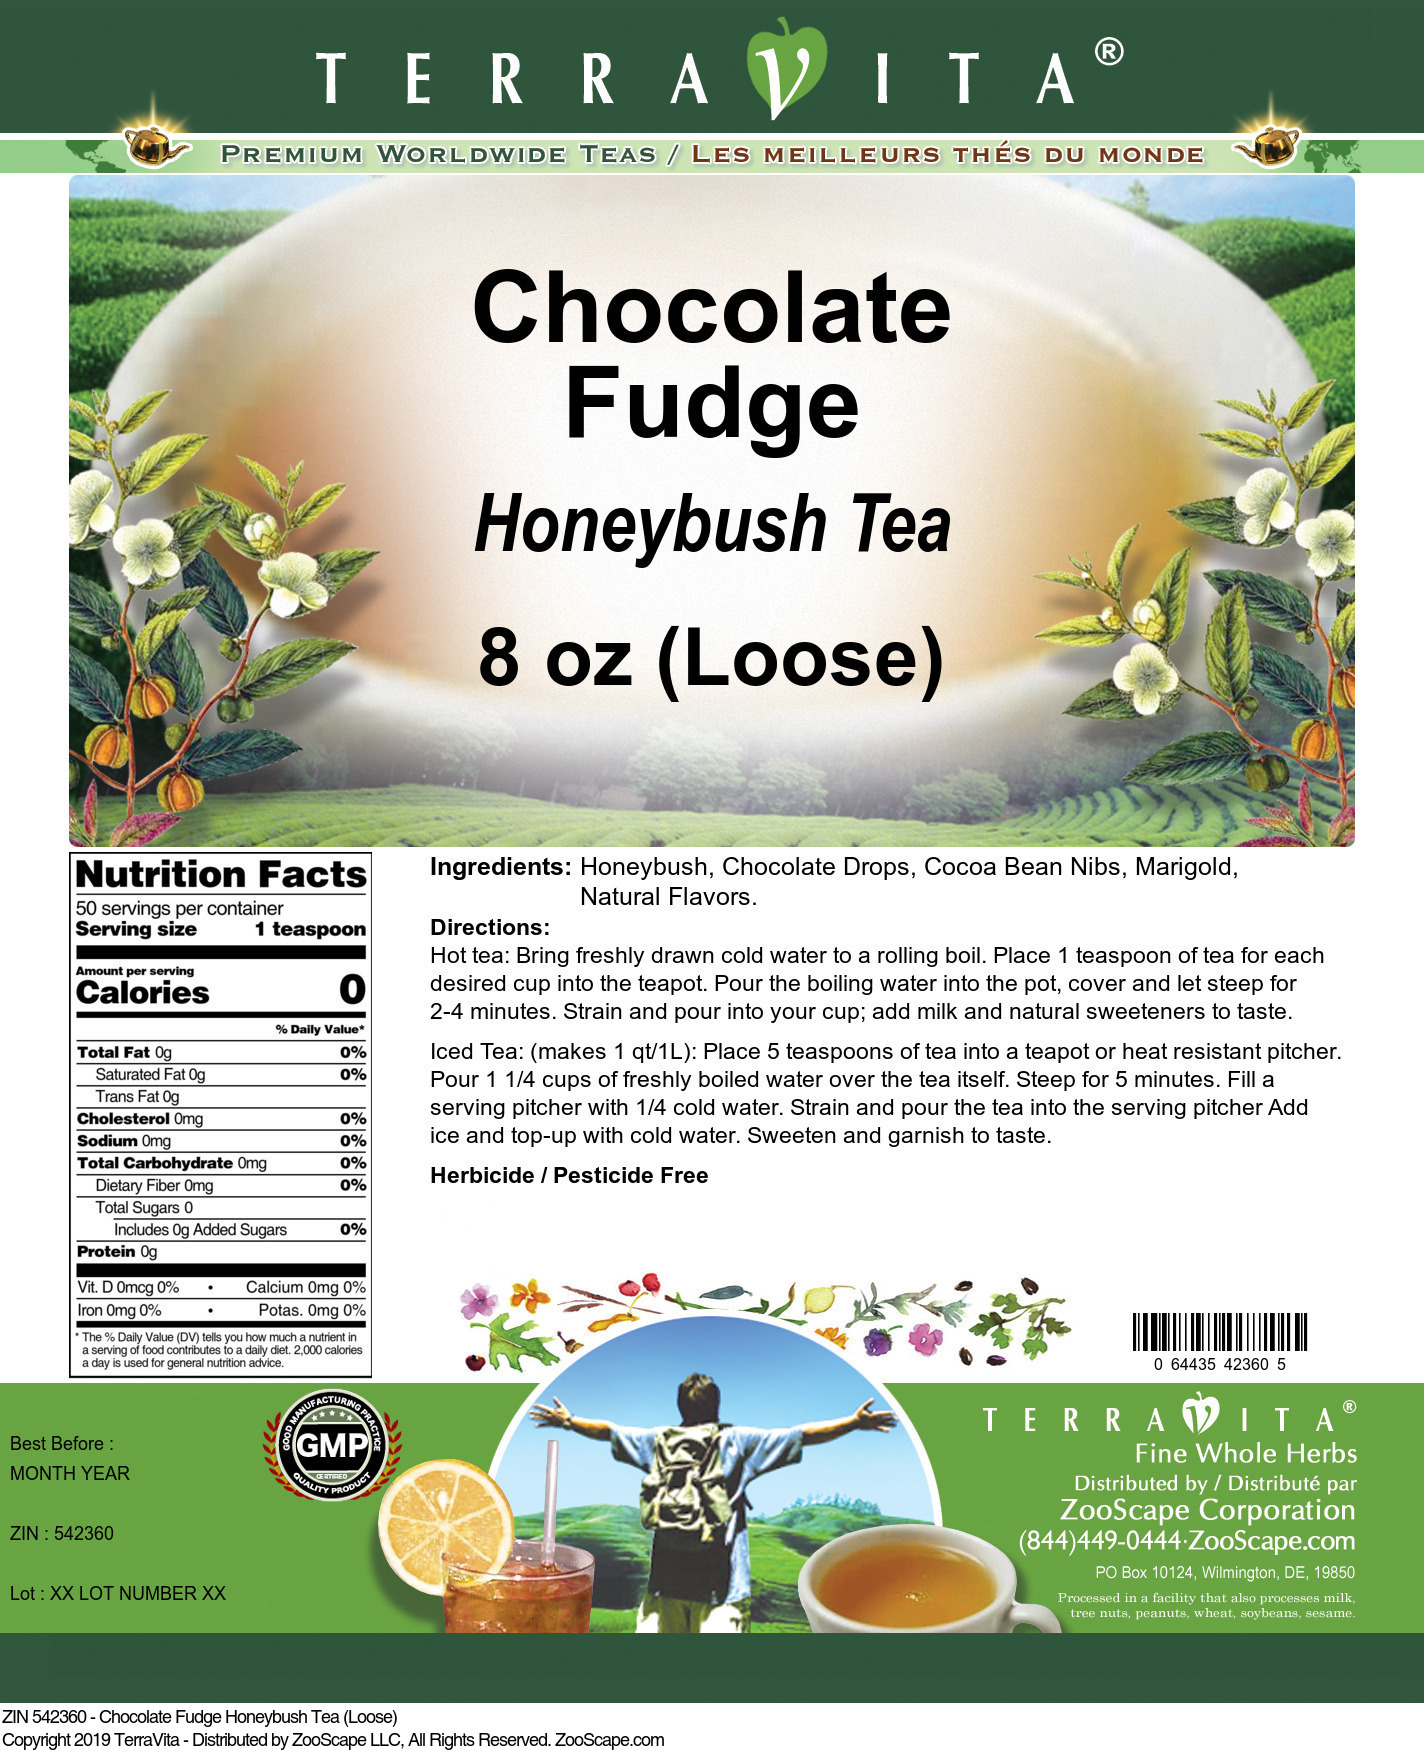 Chocolate Fudge Honeybush Tea (Loose) - Label